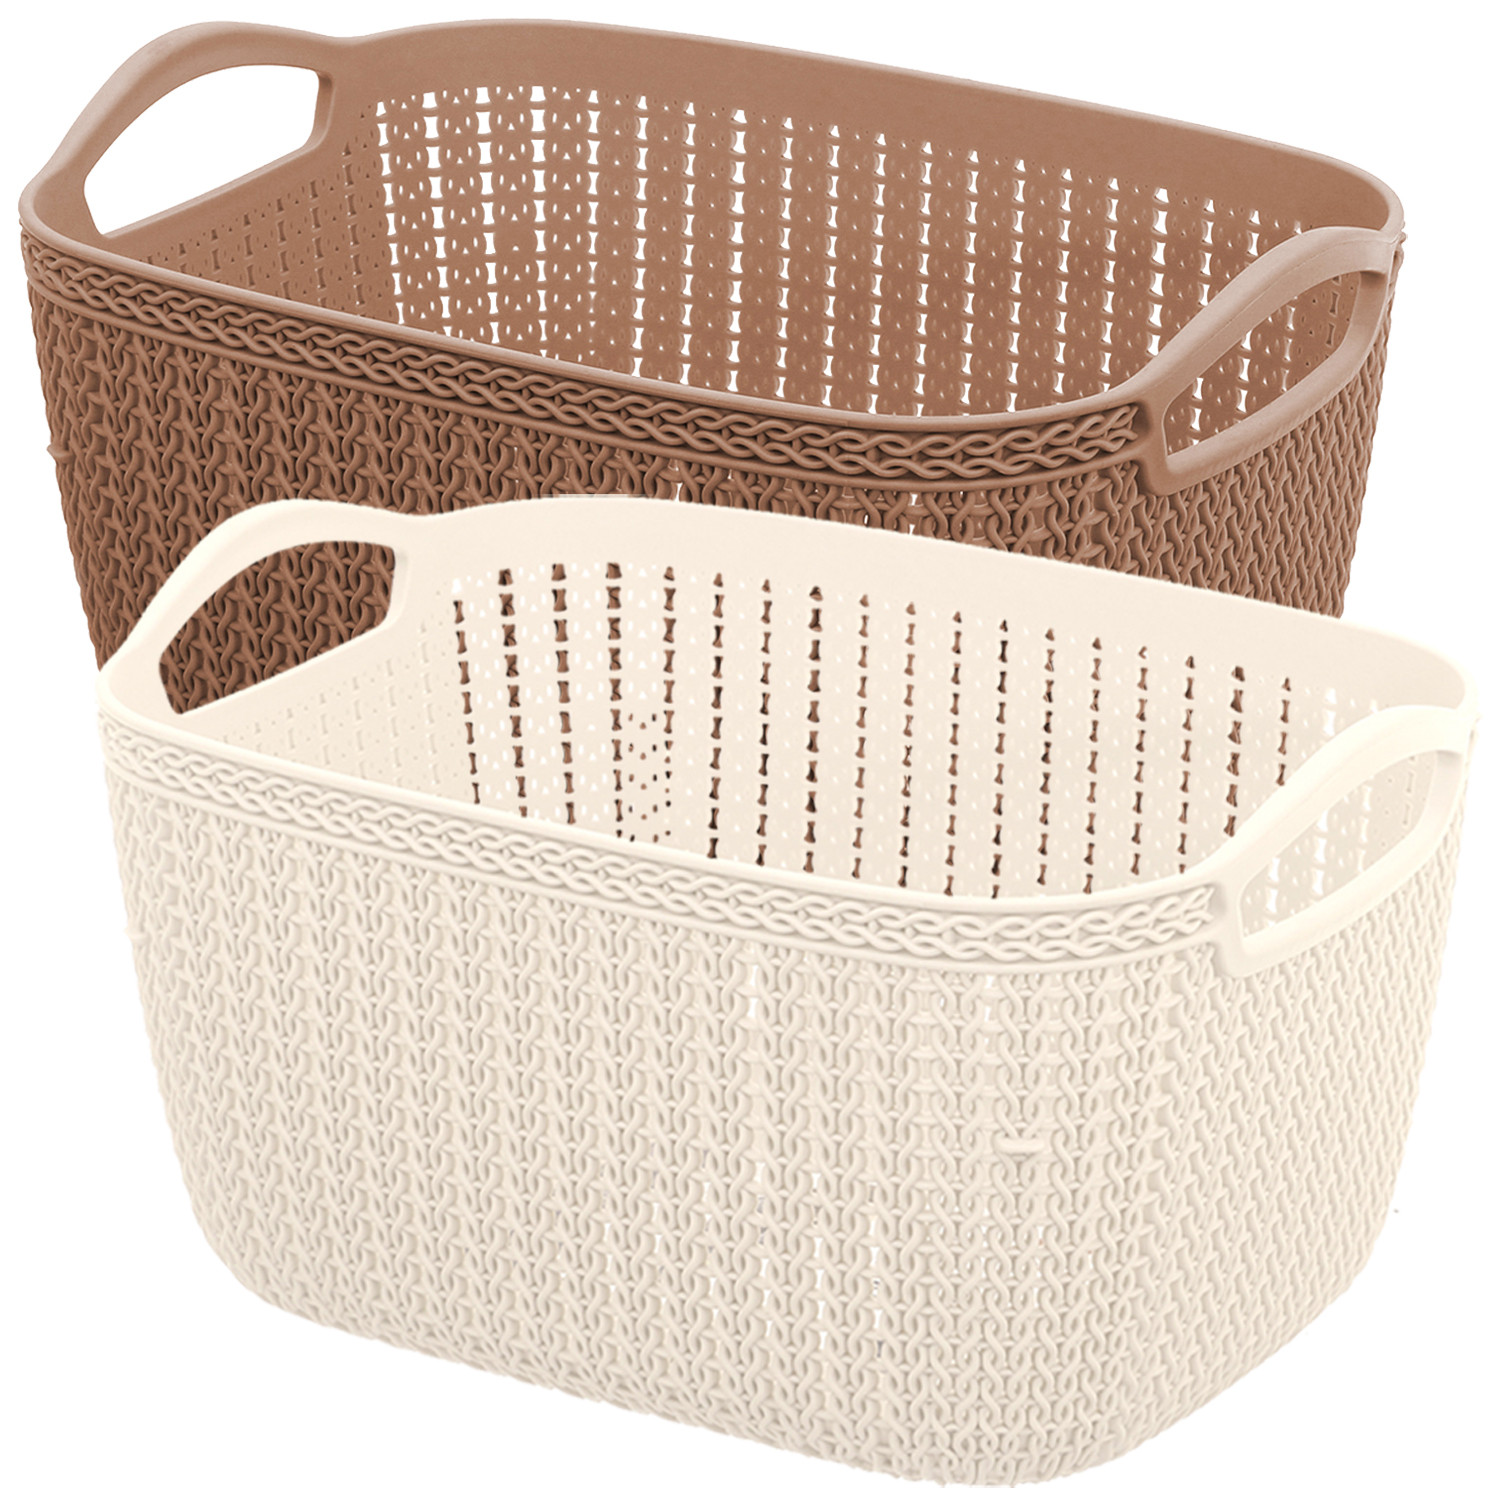 Kuber Industries Unbreakable Plastic Multipurpose Medium Size Flexible Storage Baskets / Fruit Vegetable Bathroom Stationary Home Basket with Handles (Brown & Cream) -CTKTC39079